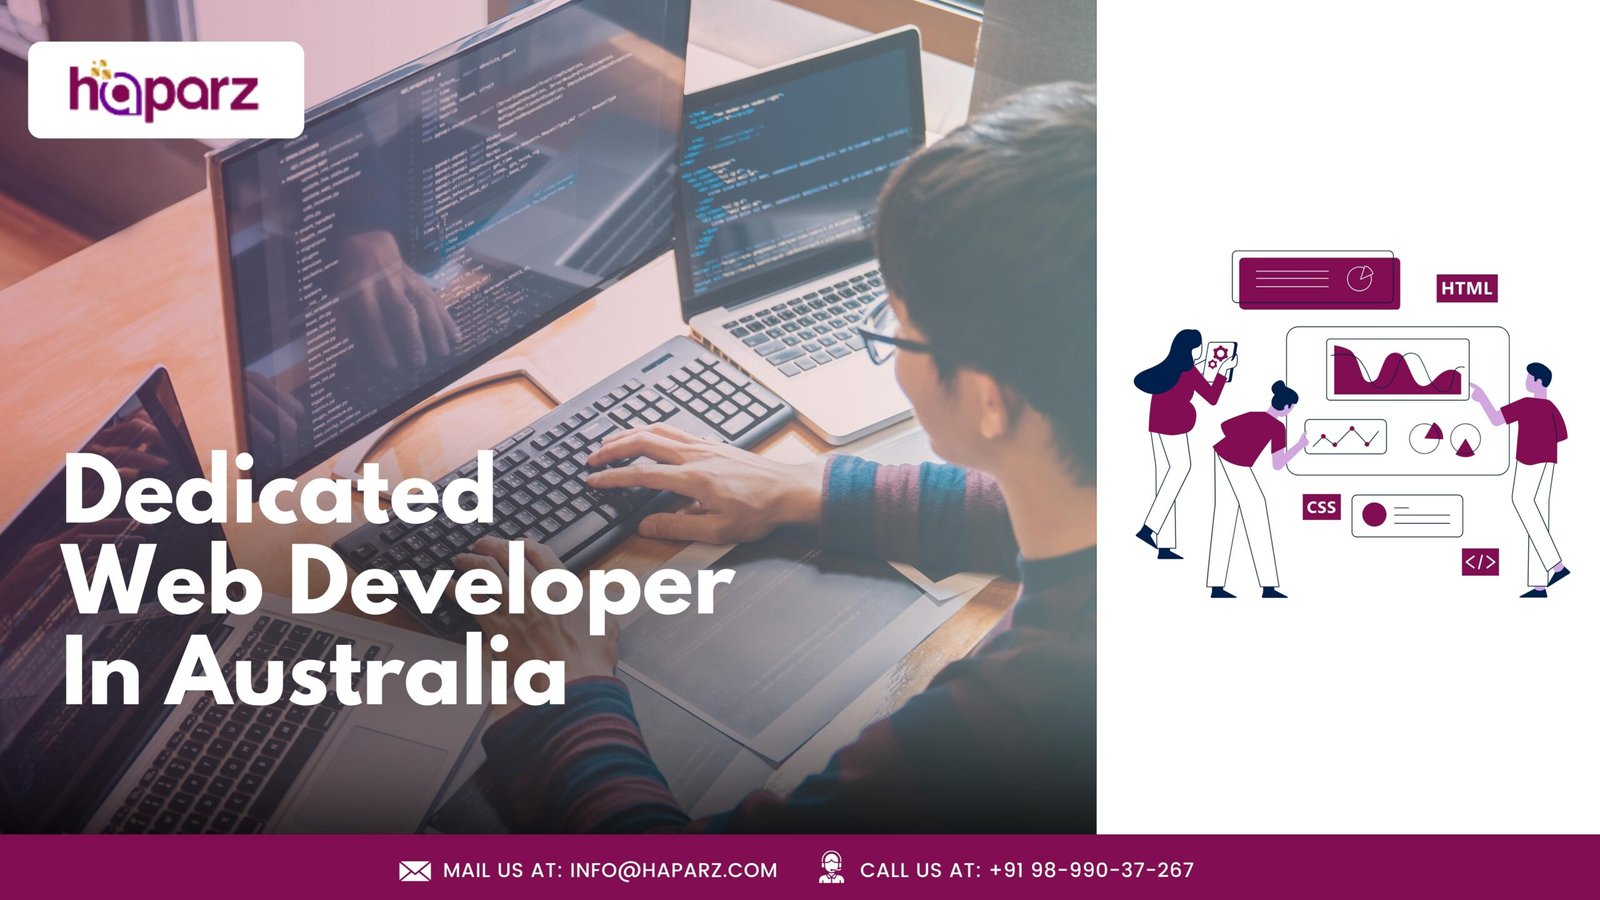 Hire a Dedicated Web Developer in Australia